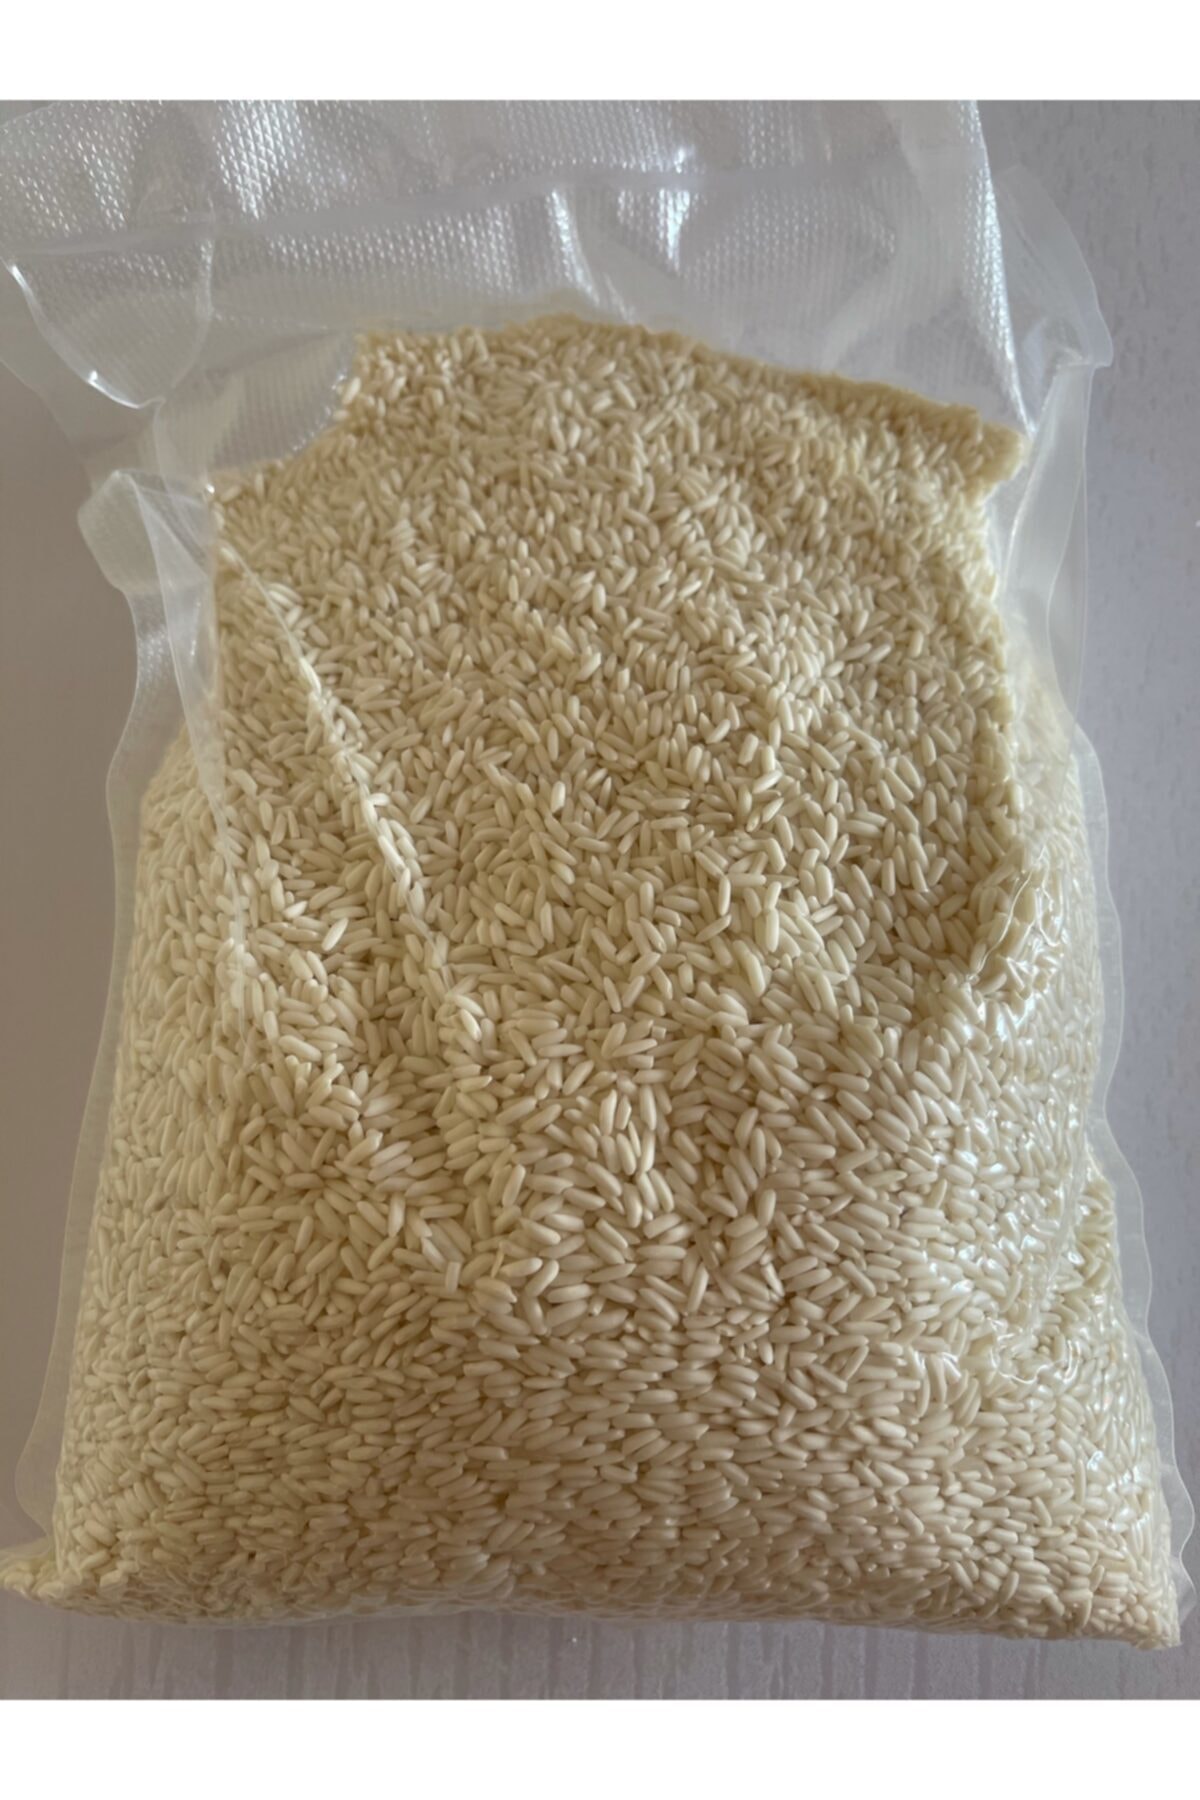 Nattita Thai Sticky Rice (GLUTEN FREE) Glutensiz Yapışkan Prinç. 1kg